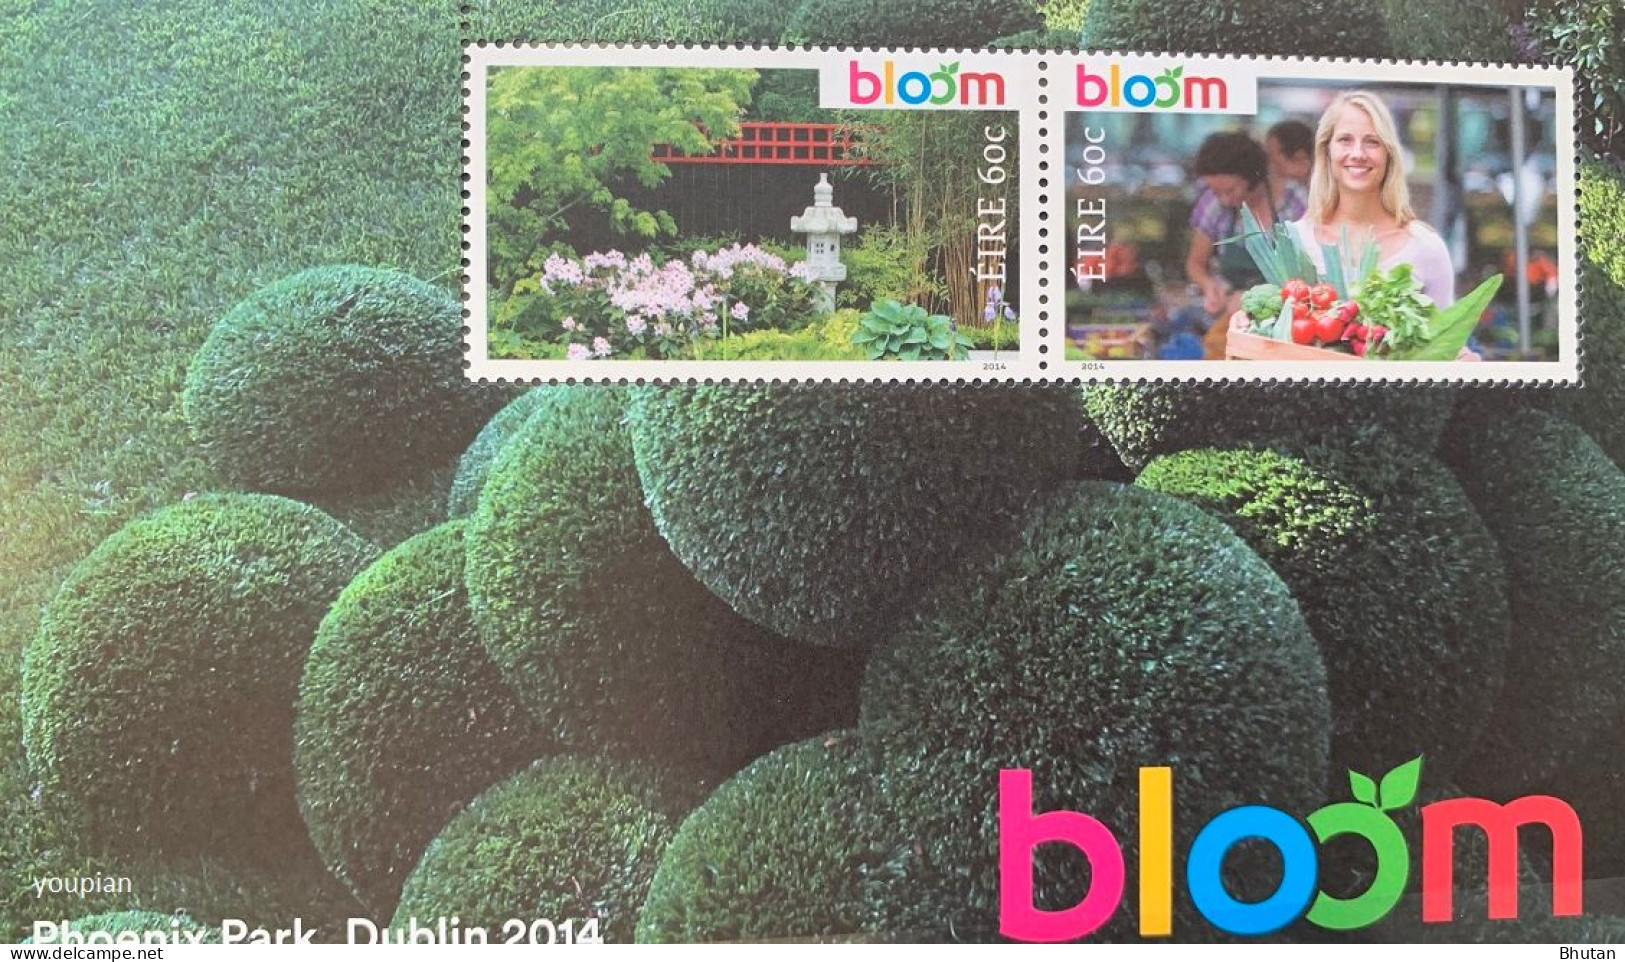 Ireland 2014, Dublin - Ireland Phoenix Park Horticultural Exhibition, MNH S/S - Unused Stamps